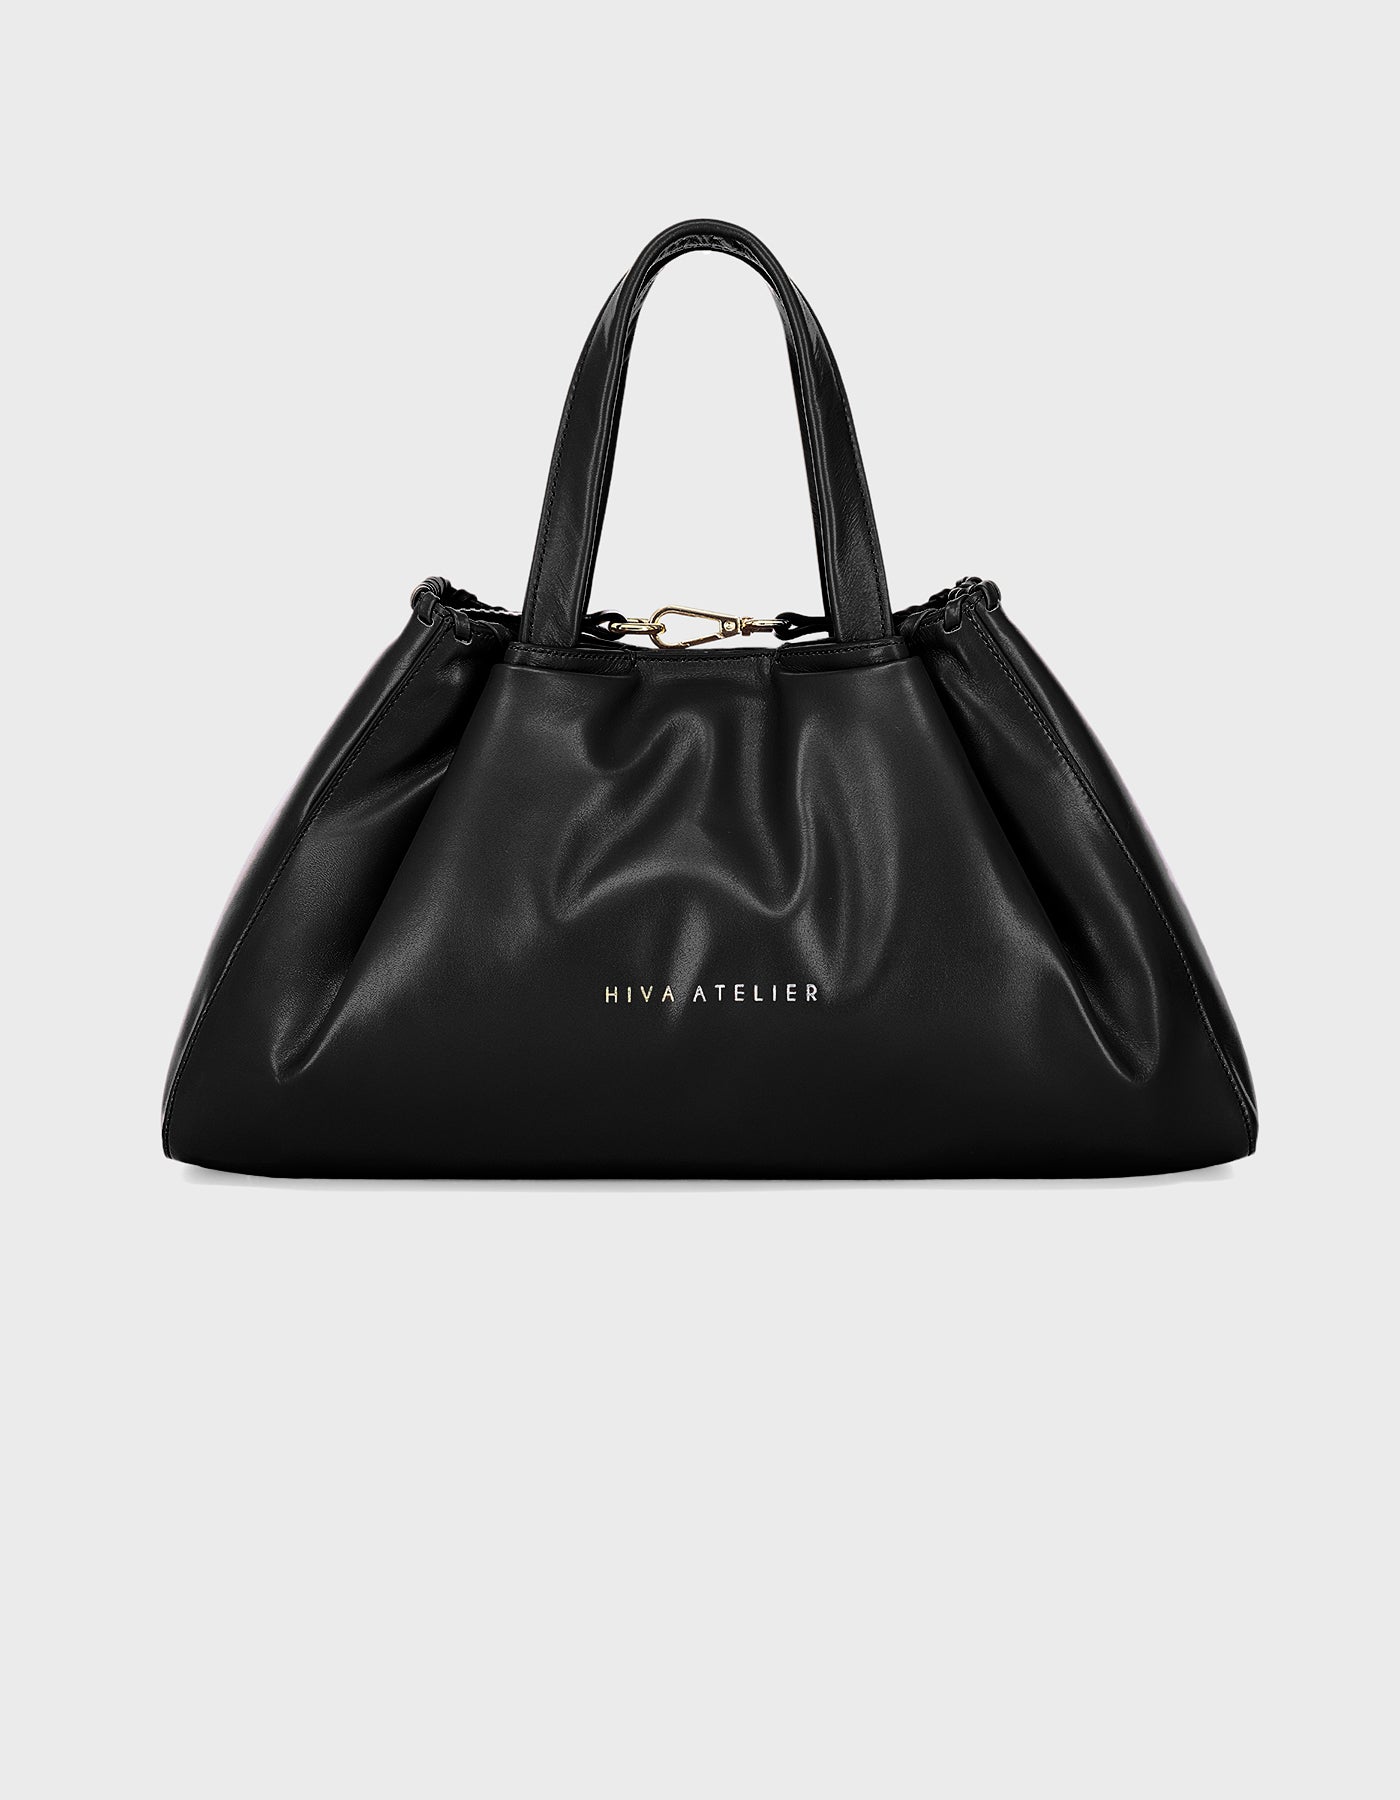 Hiva Atelier | Nubi Pedded Shoulder Bag Black | Beautiful and Versatile Leather Accessories